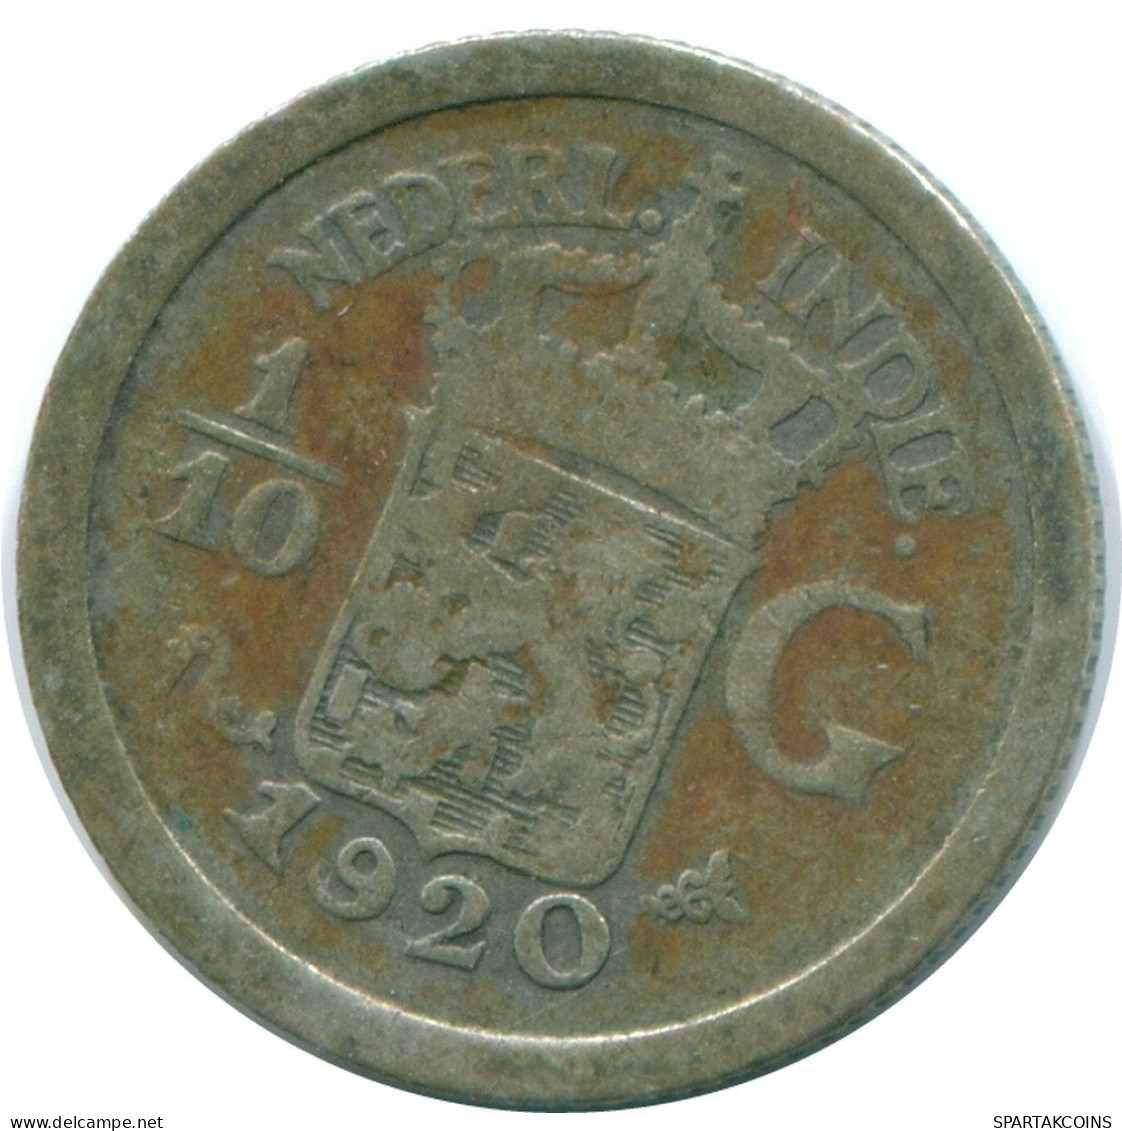 1/10 GULDEN 1920 NIEDERLANDE OSTINDIEN SILBER Koloniale Münze #NL13399.3.D.A - Dutch East Indies